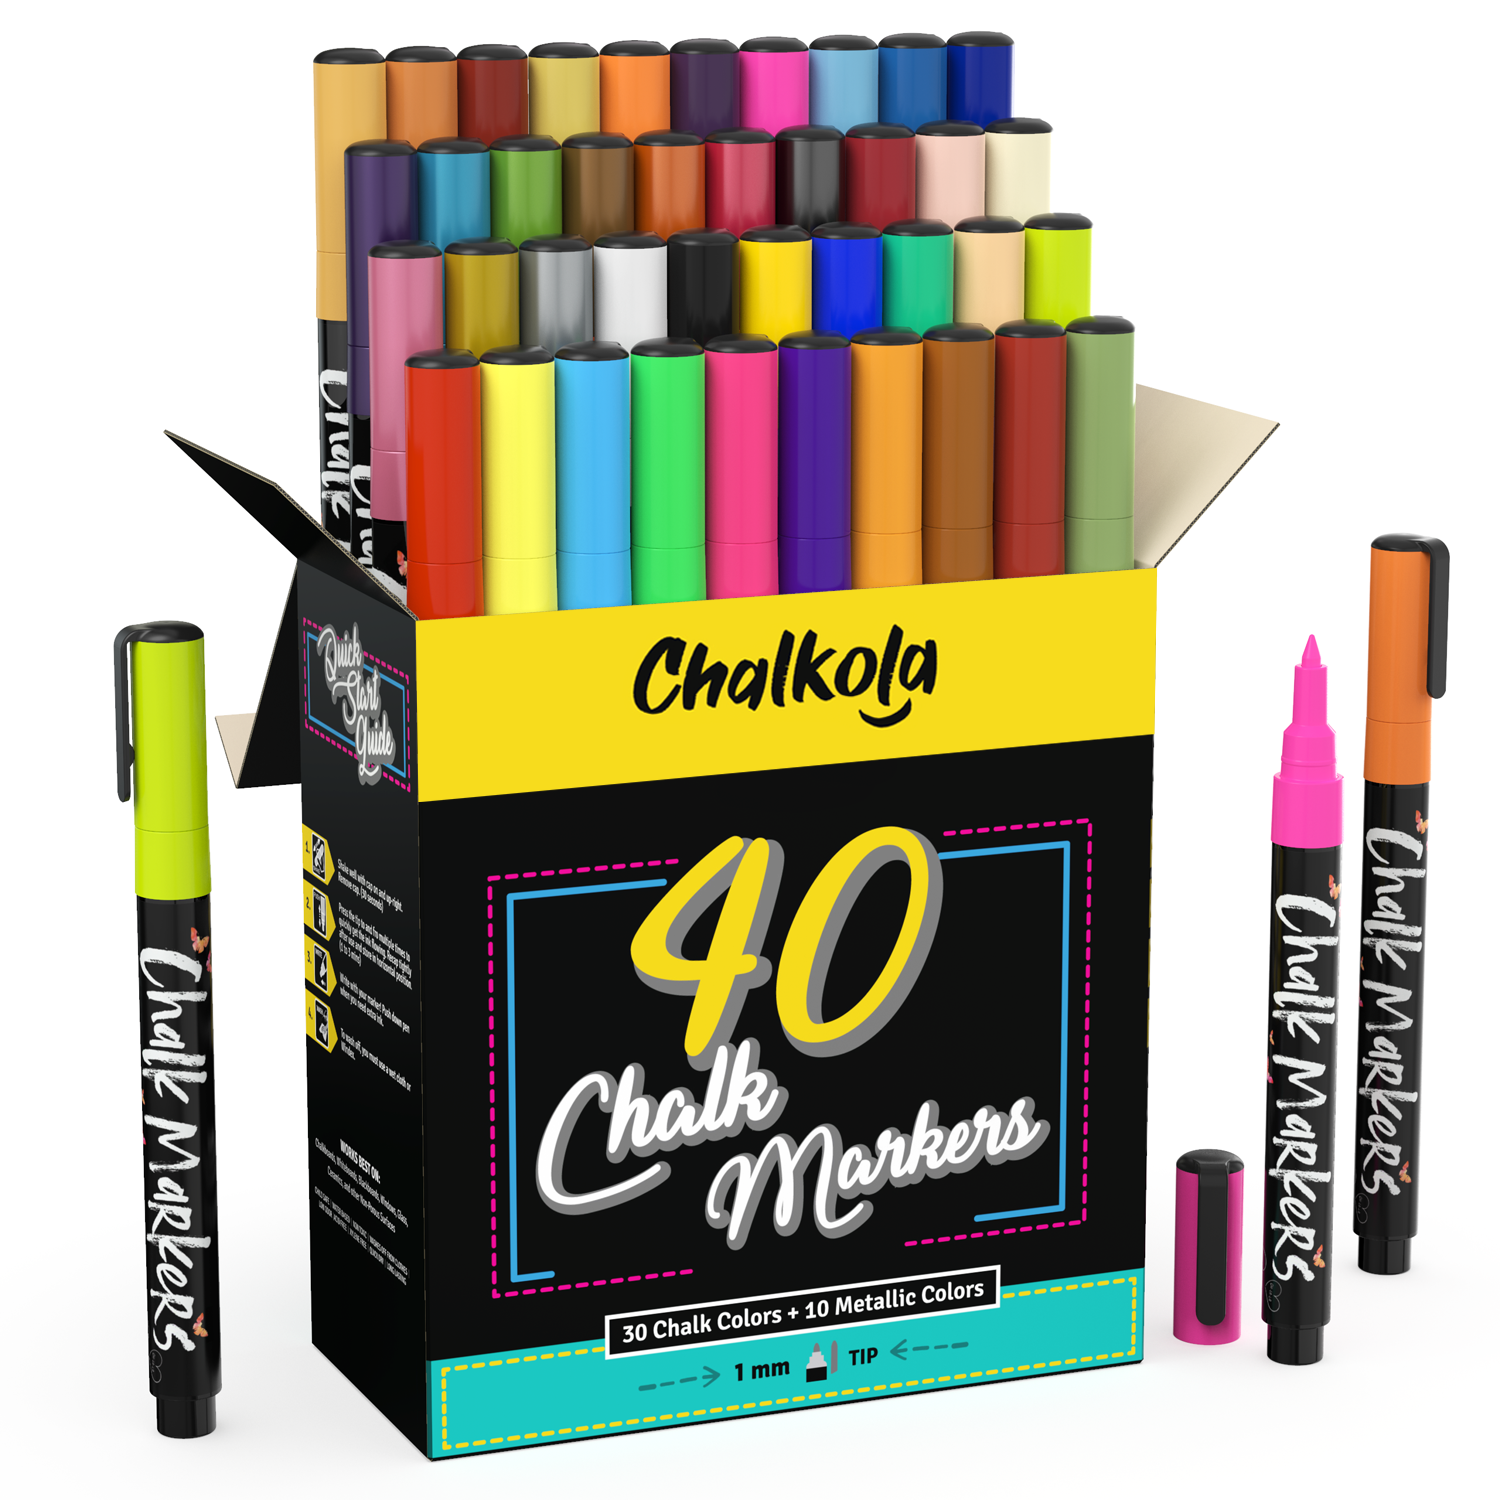 Starter Chalk Markers Bundle - 5 White + 10 Bold Colors